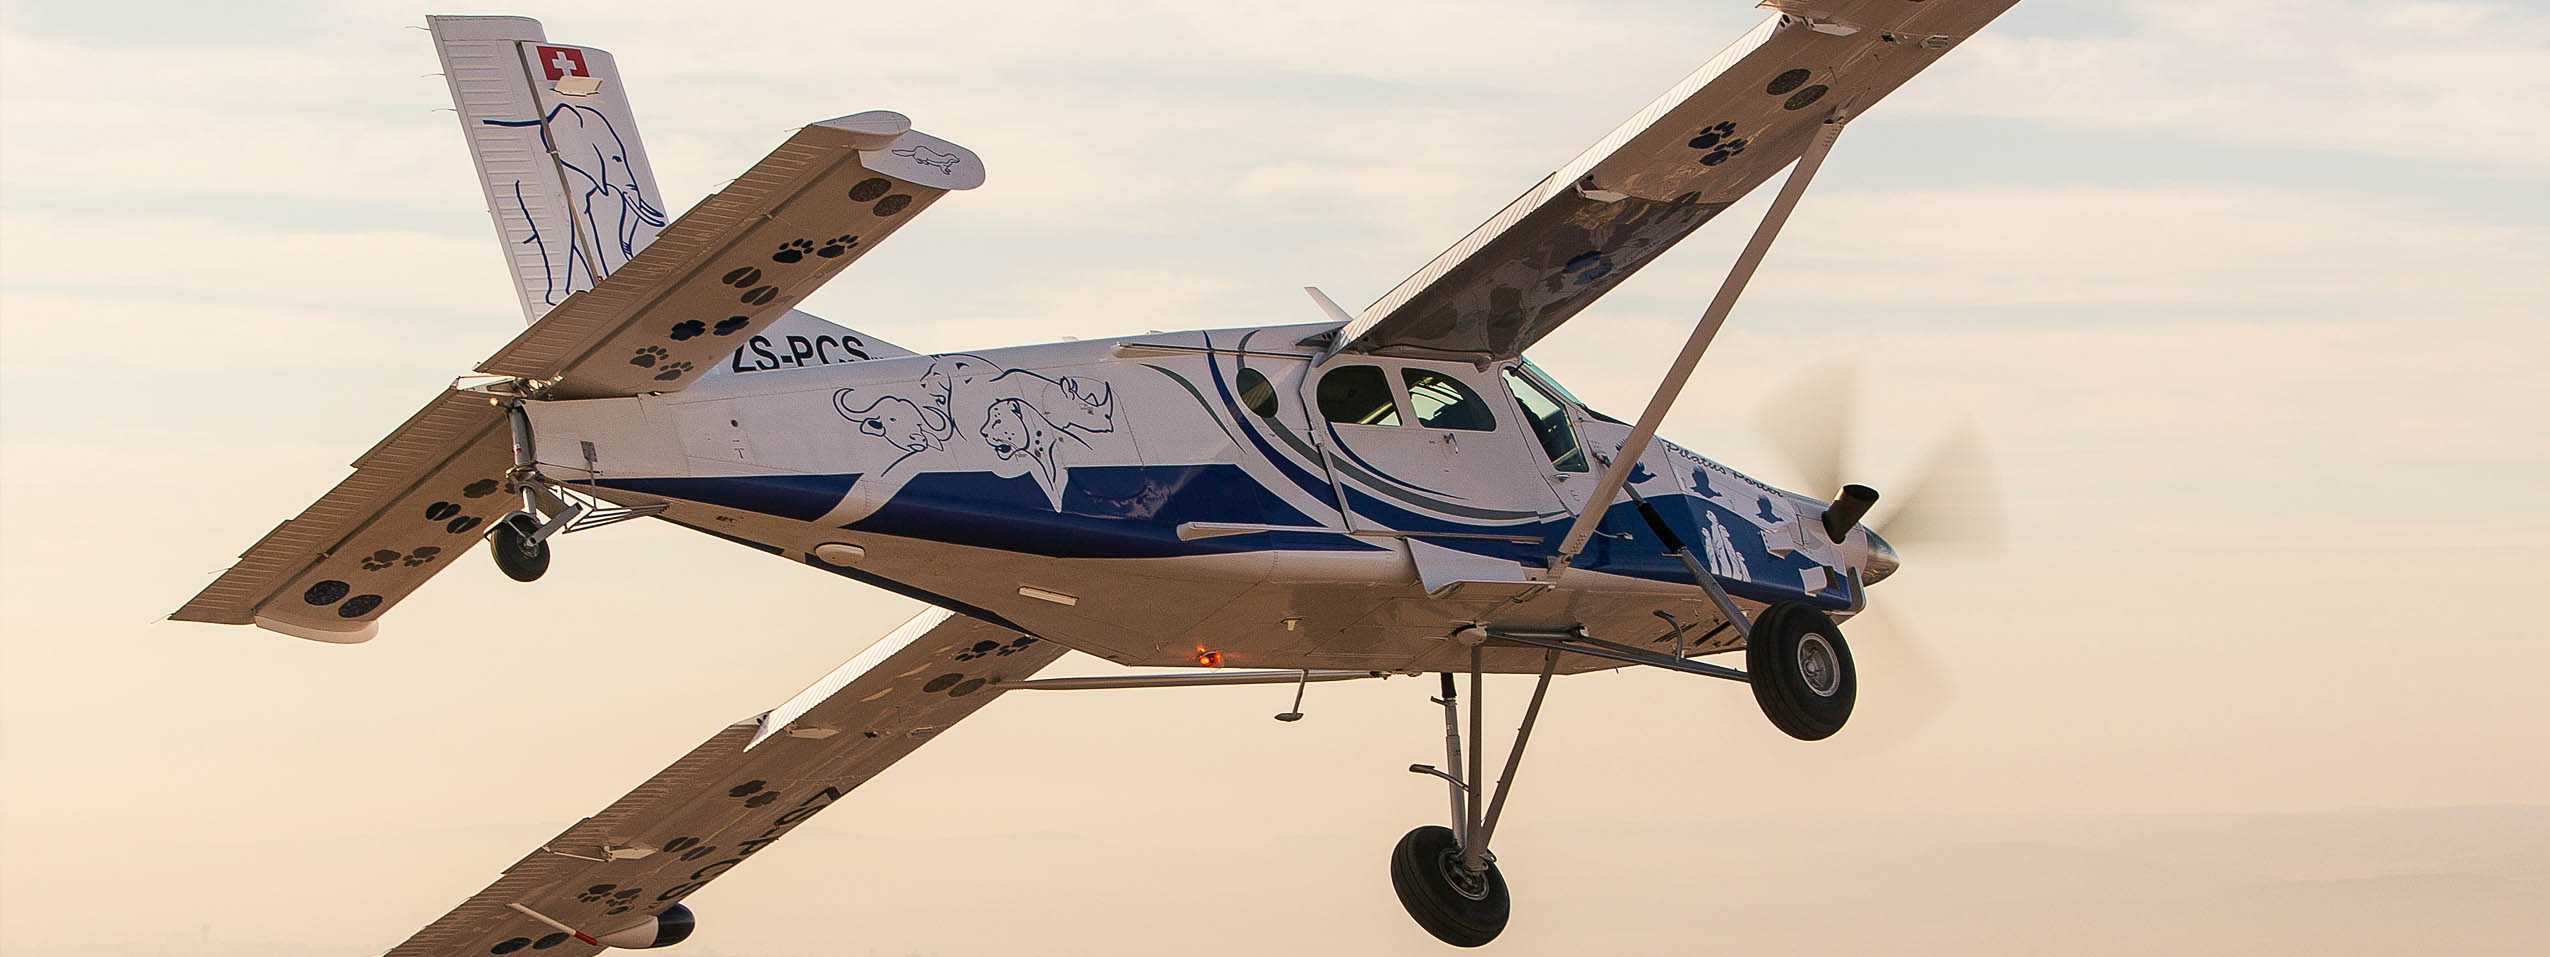 The End Of An Era Pilatus Discontinues Production Of The Legendary Pilatus Porter Pc 6 Pilatus Aircraft Ltd